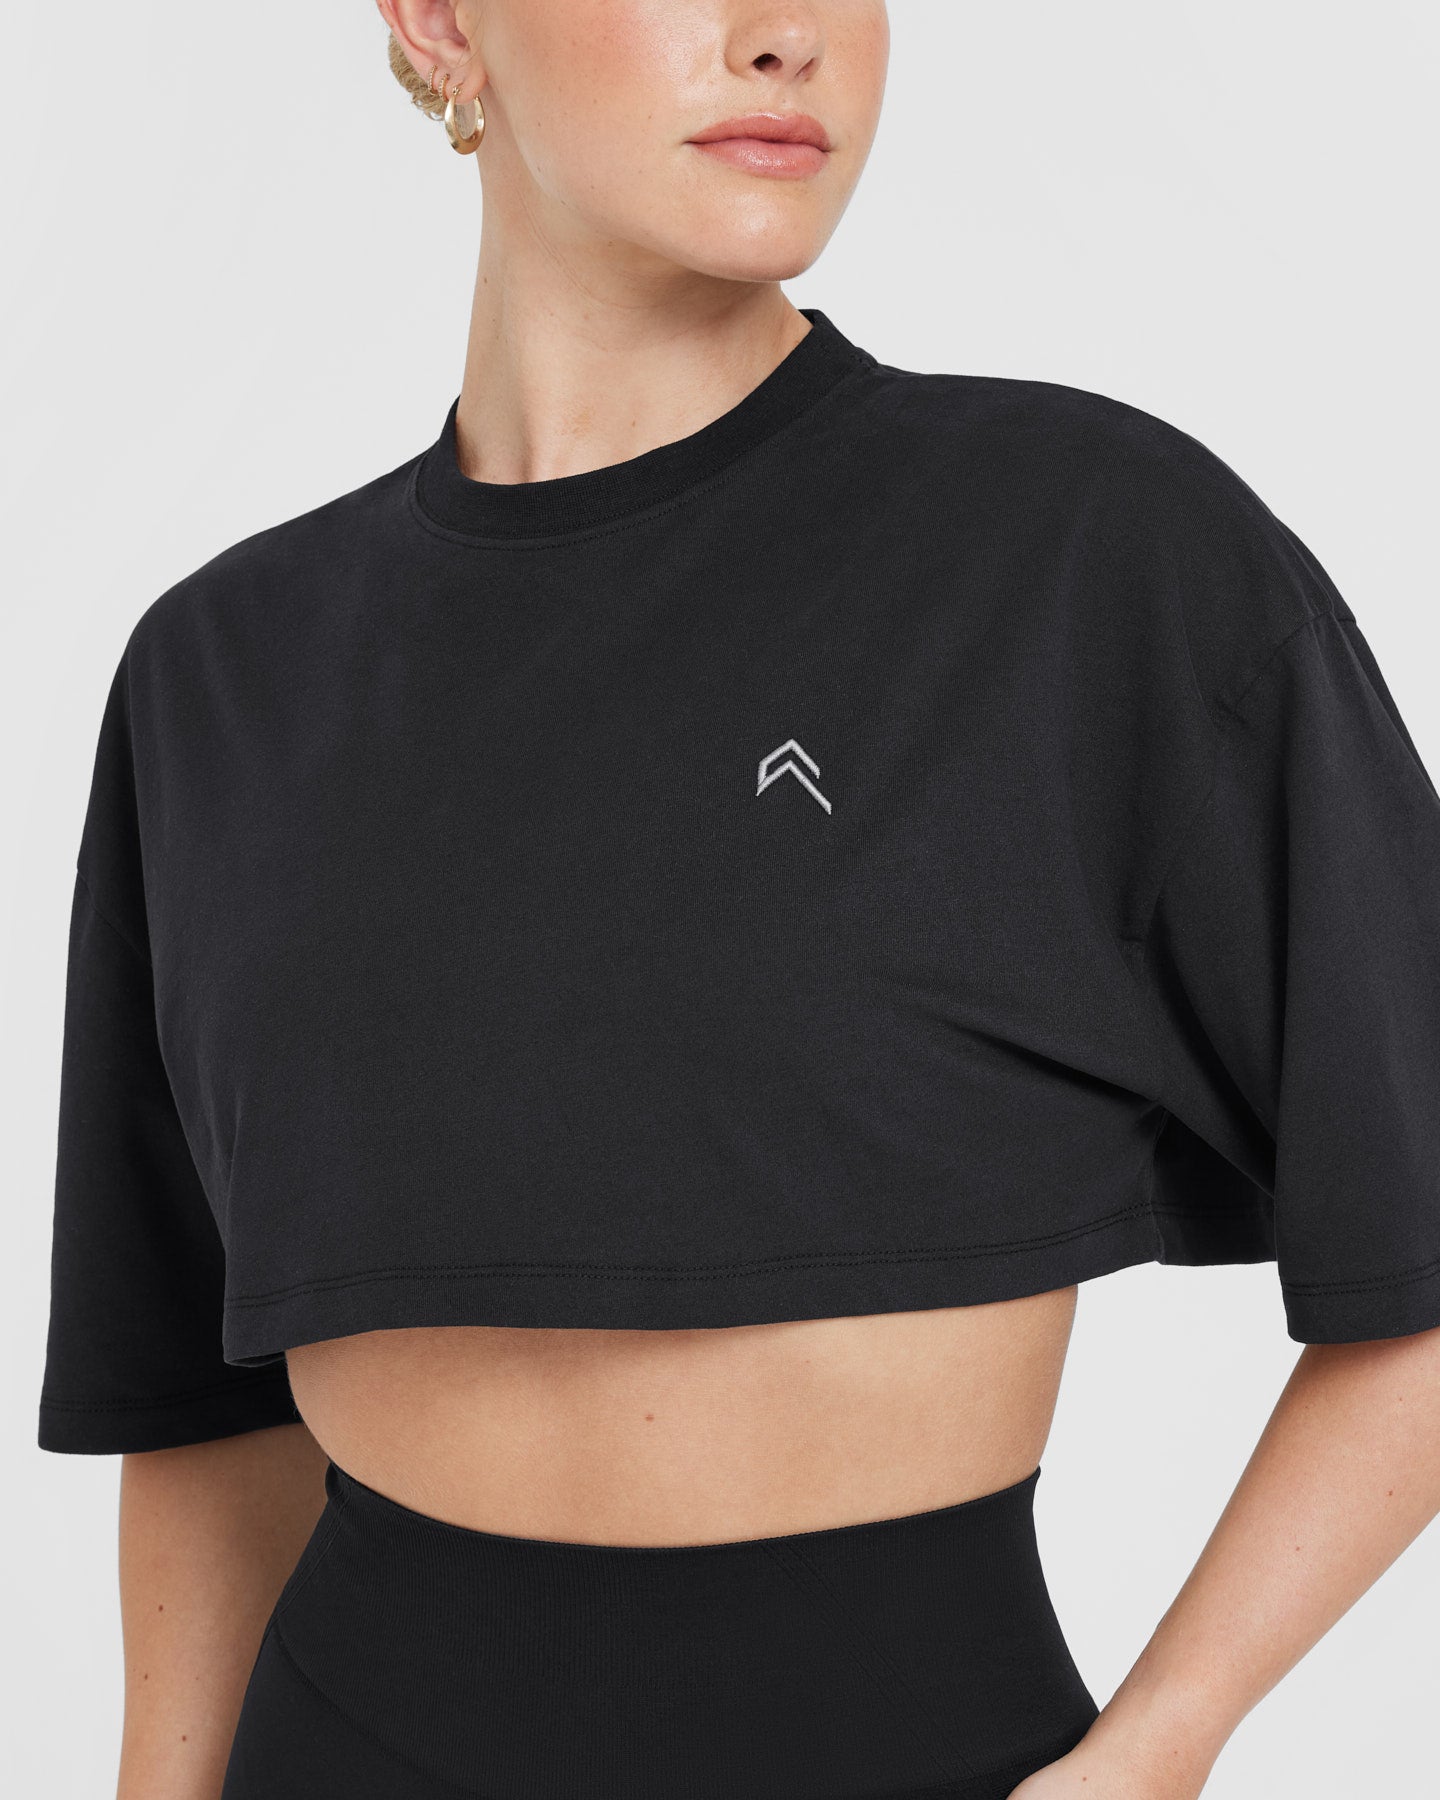 Black T-Shirt Women's Oversized - Cropped